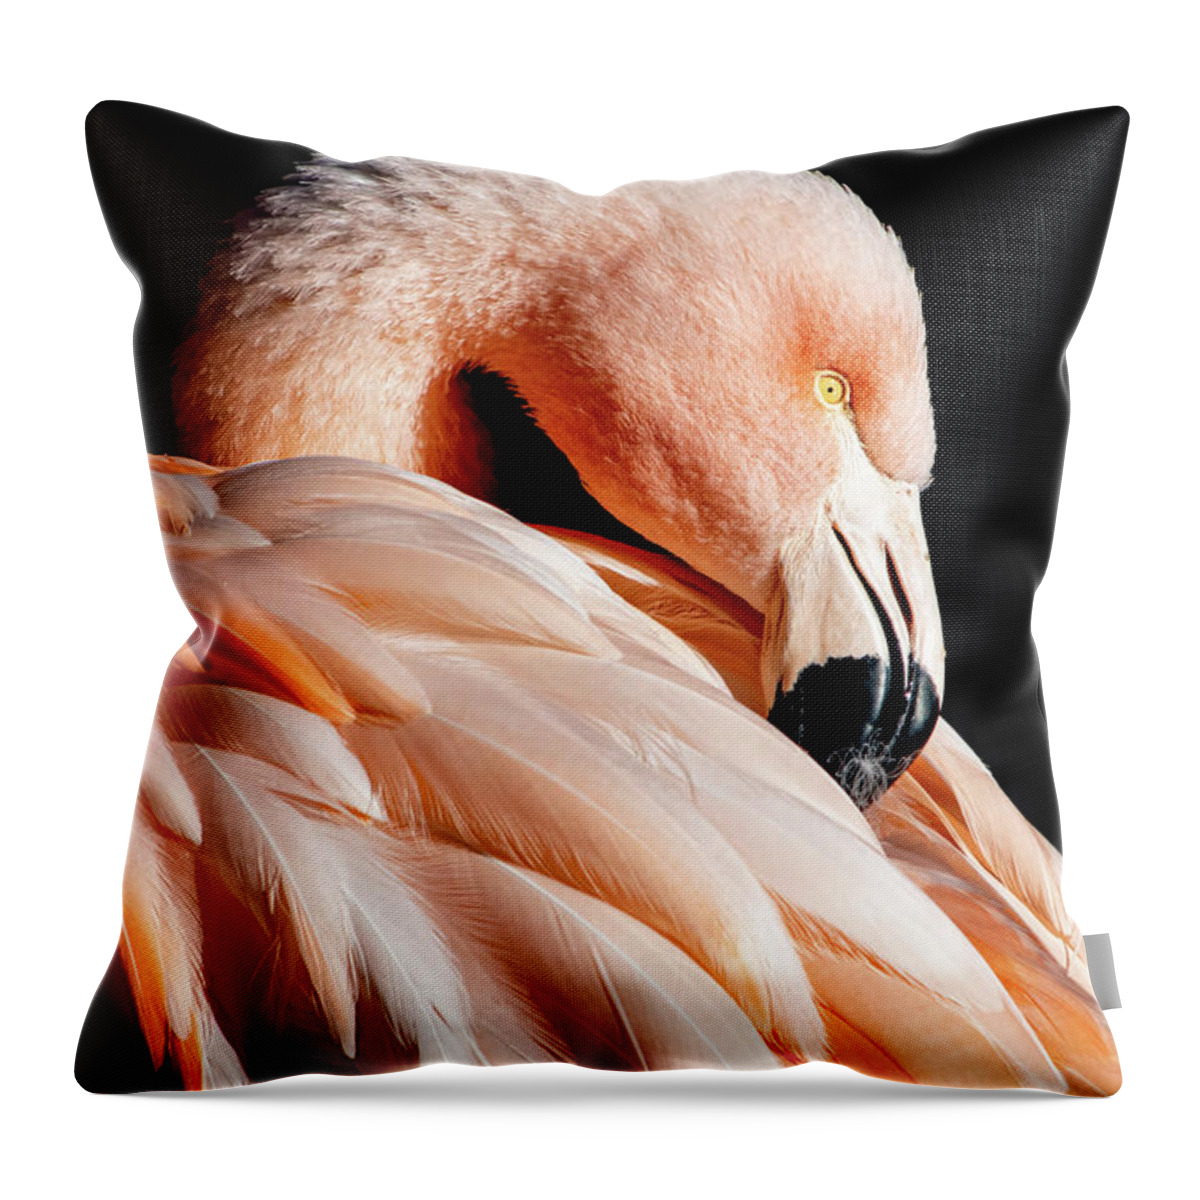 Flamingo Throw Pillow featuring the photograph Resplendent by Bonny Puckett